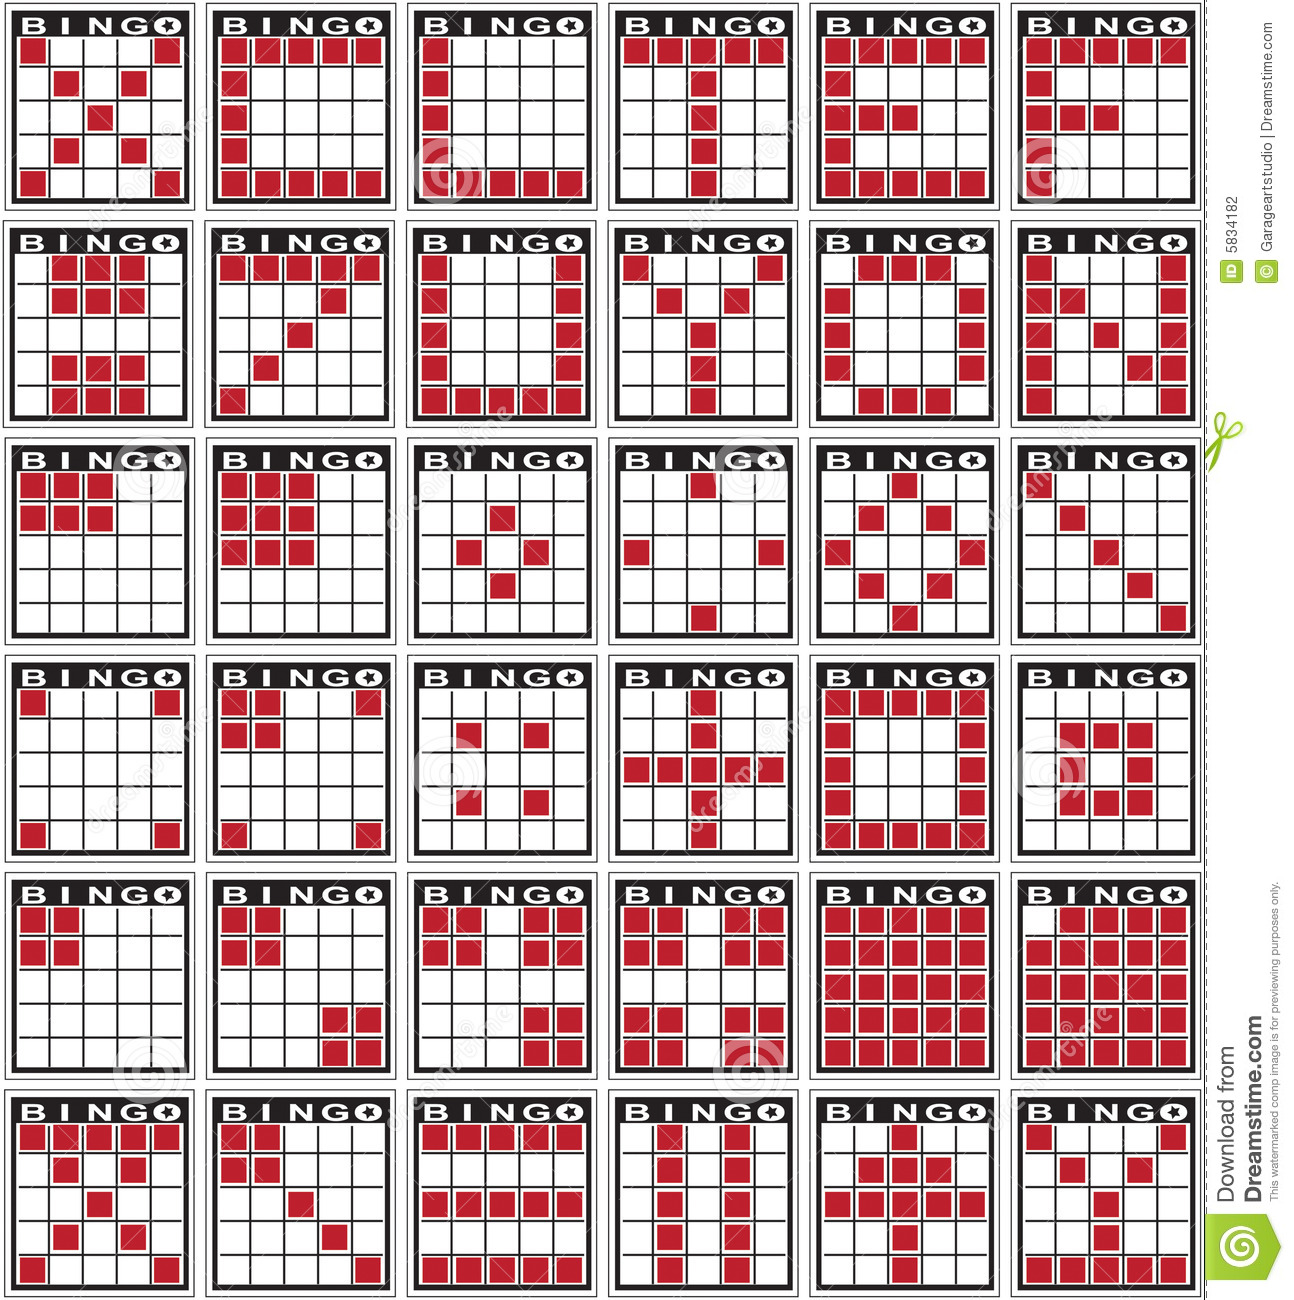 Bingo Patterns Played At Bingo Halls And Casinos